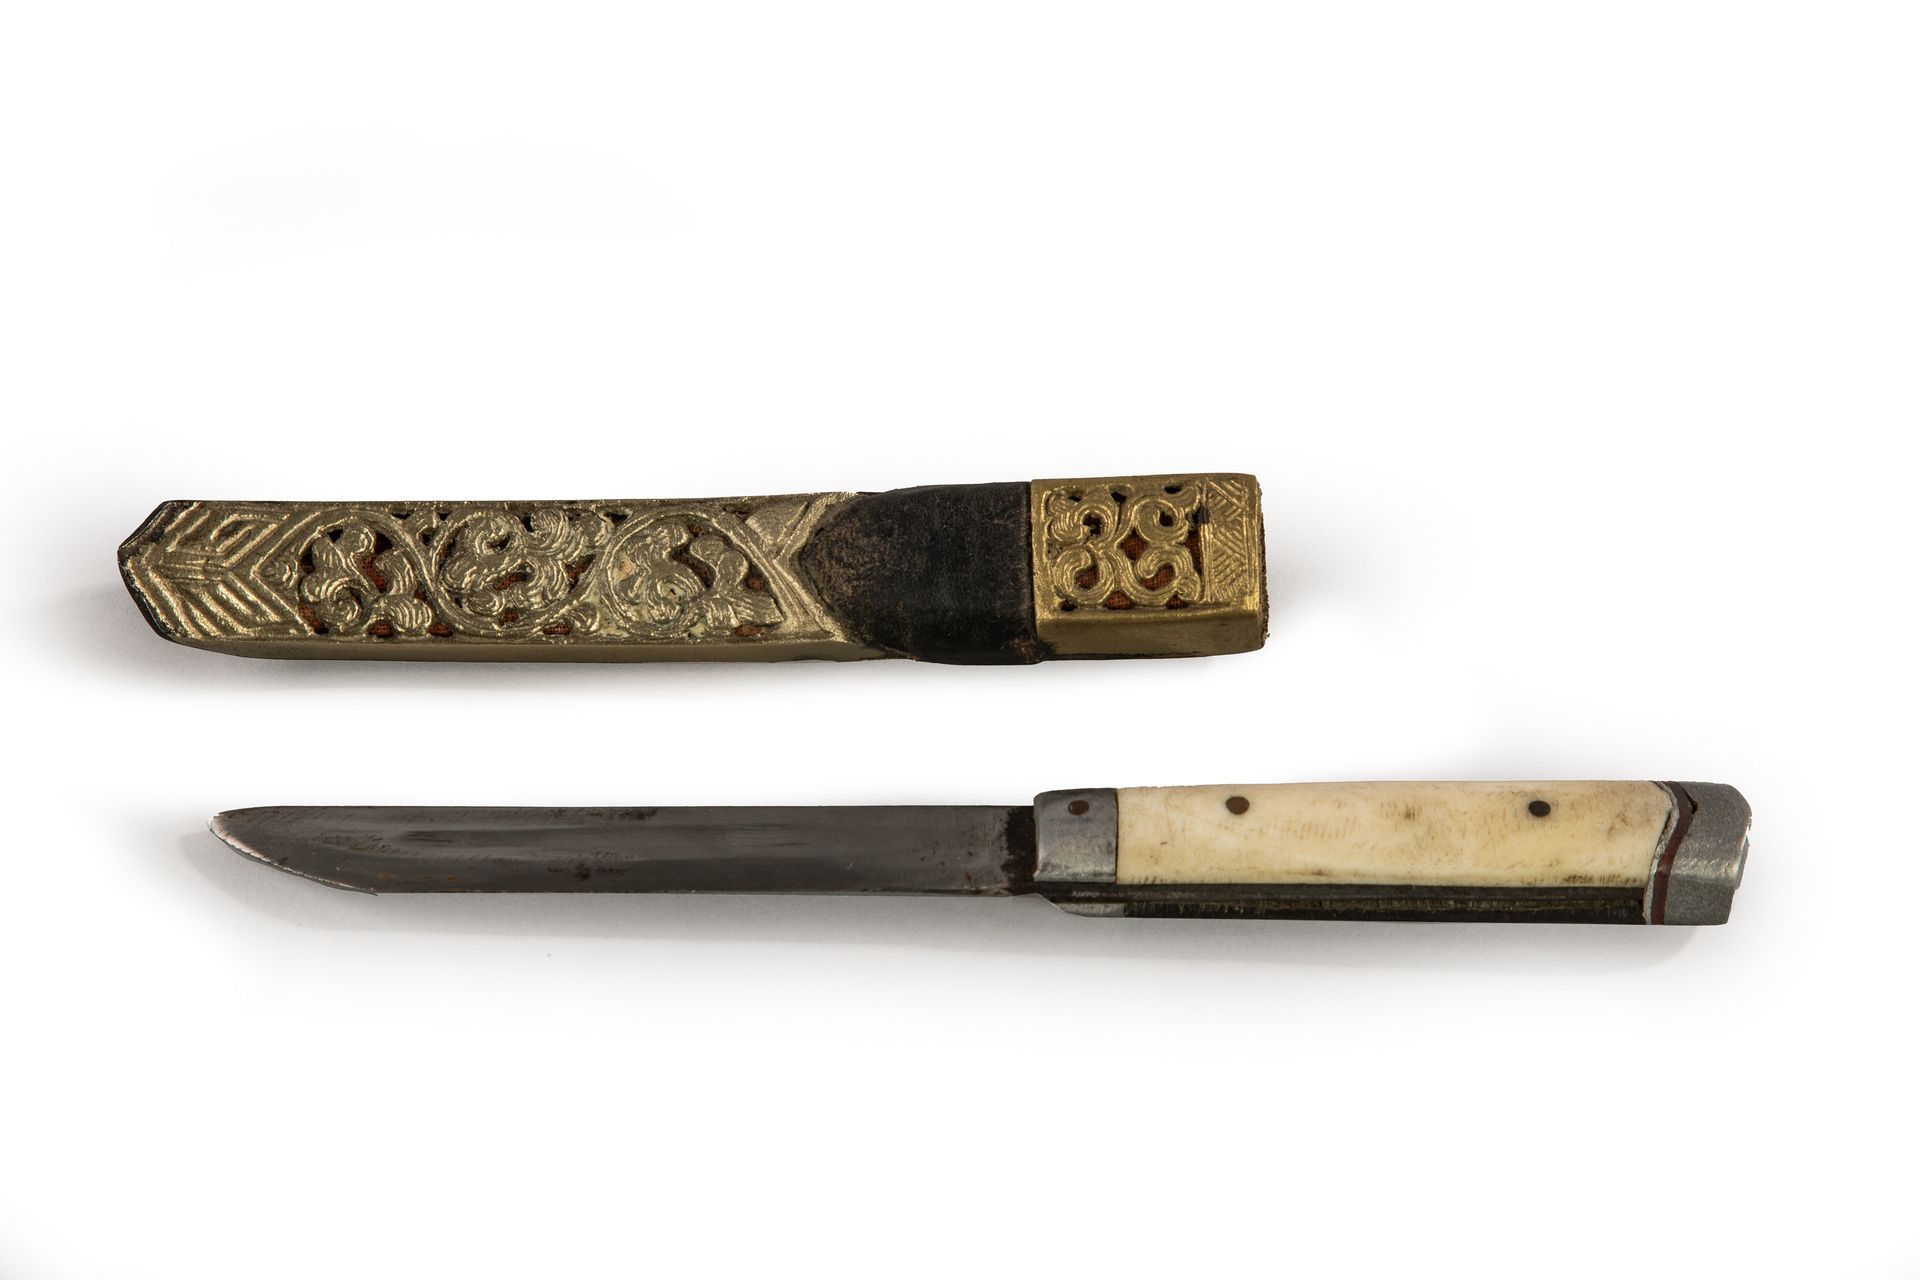 Null 
刀具

西藏 20世纪

L. 21 cm